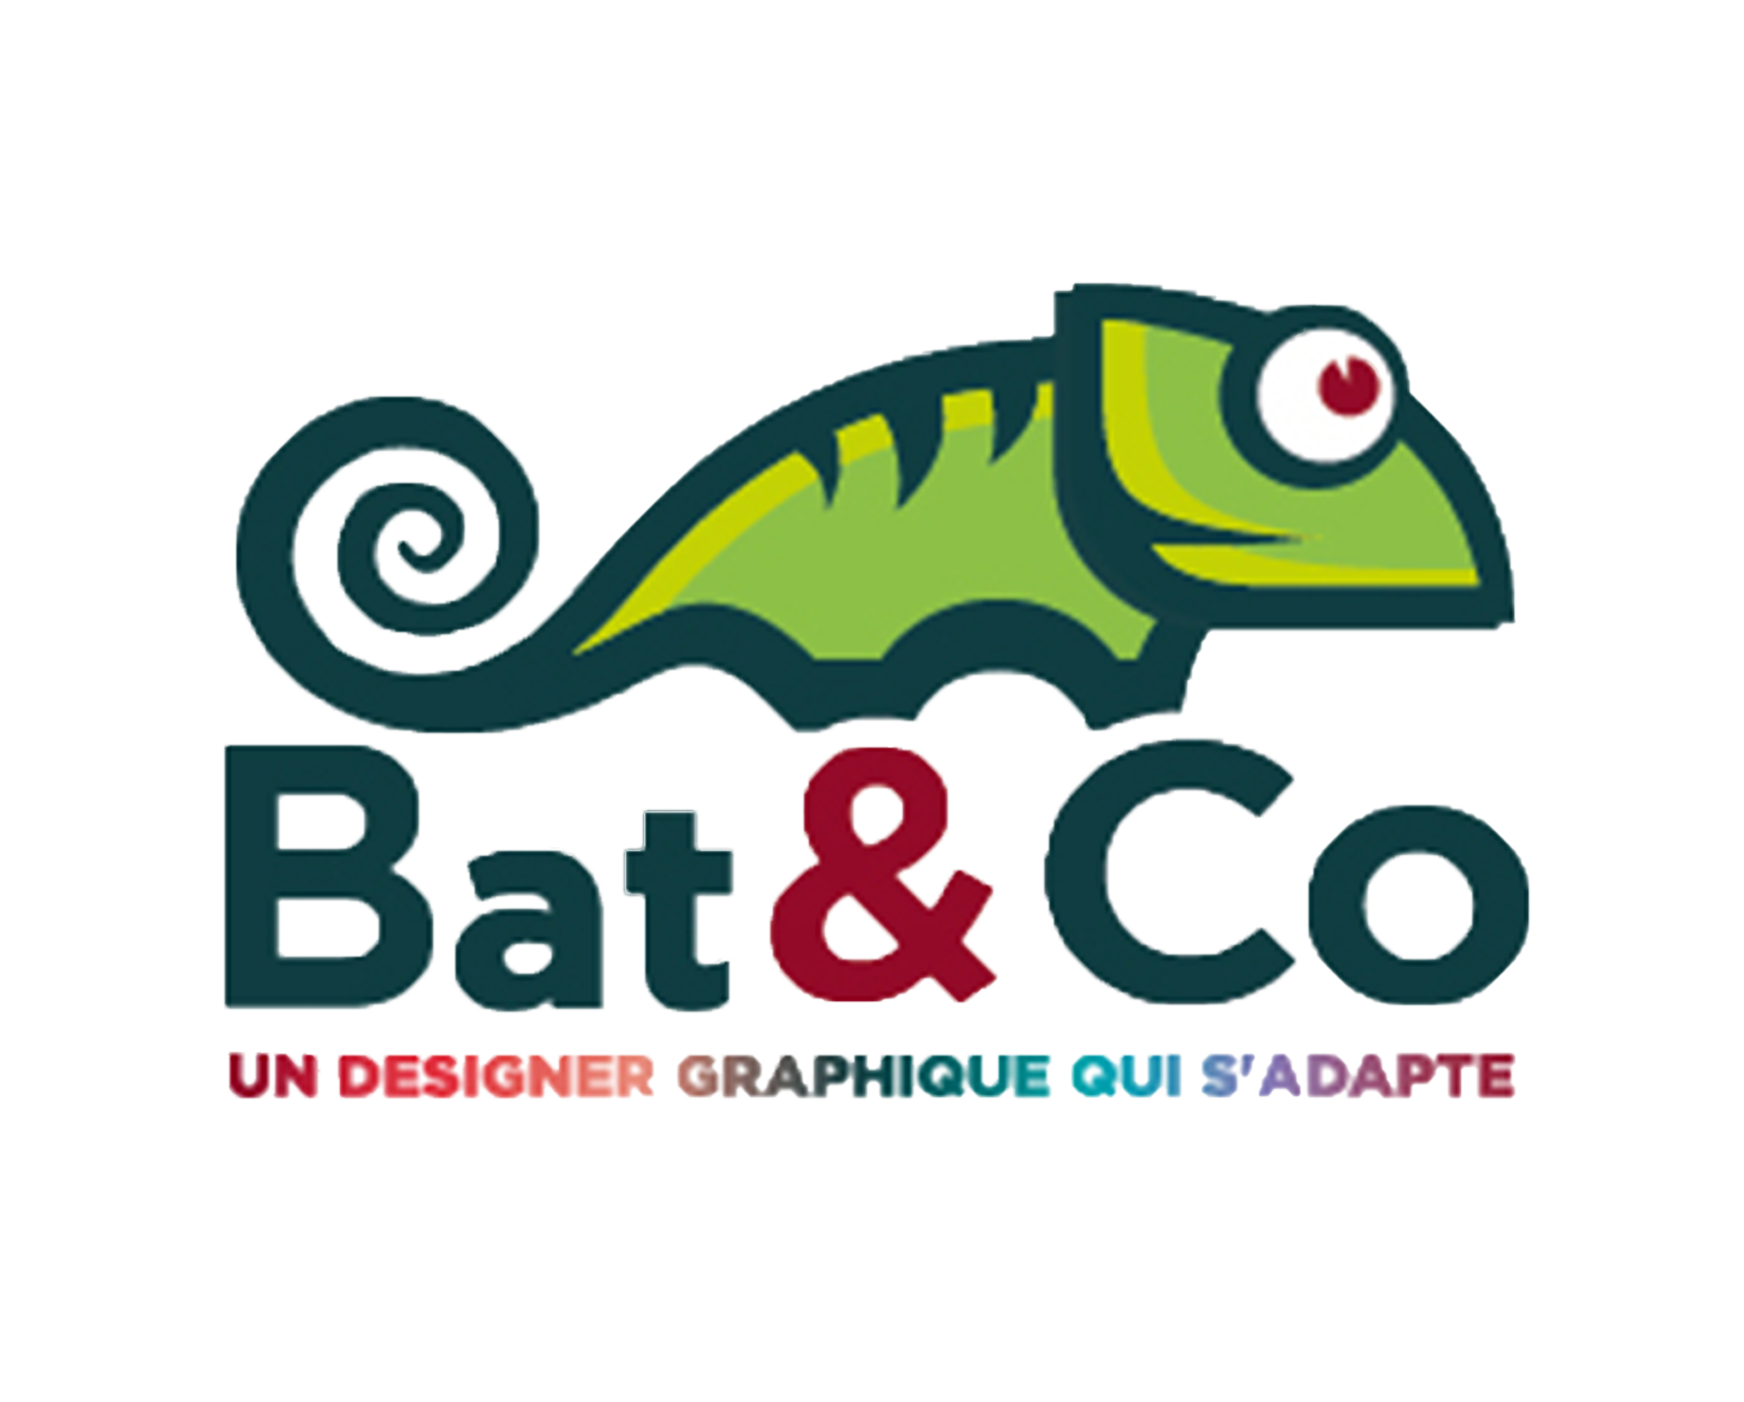 Bat & Co